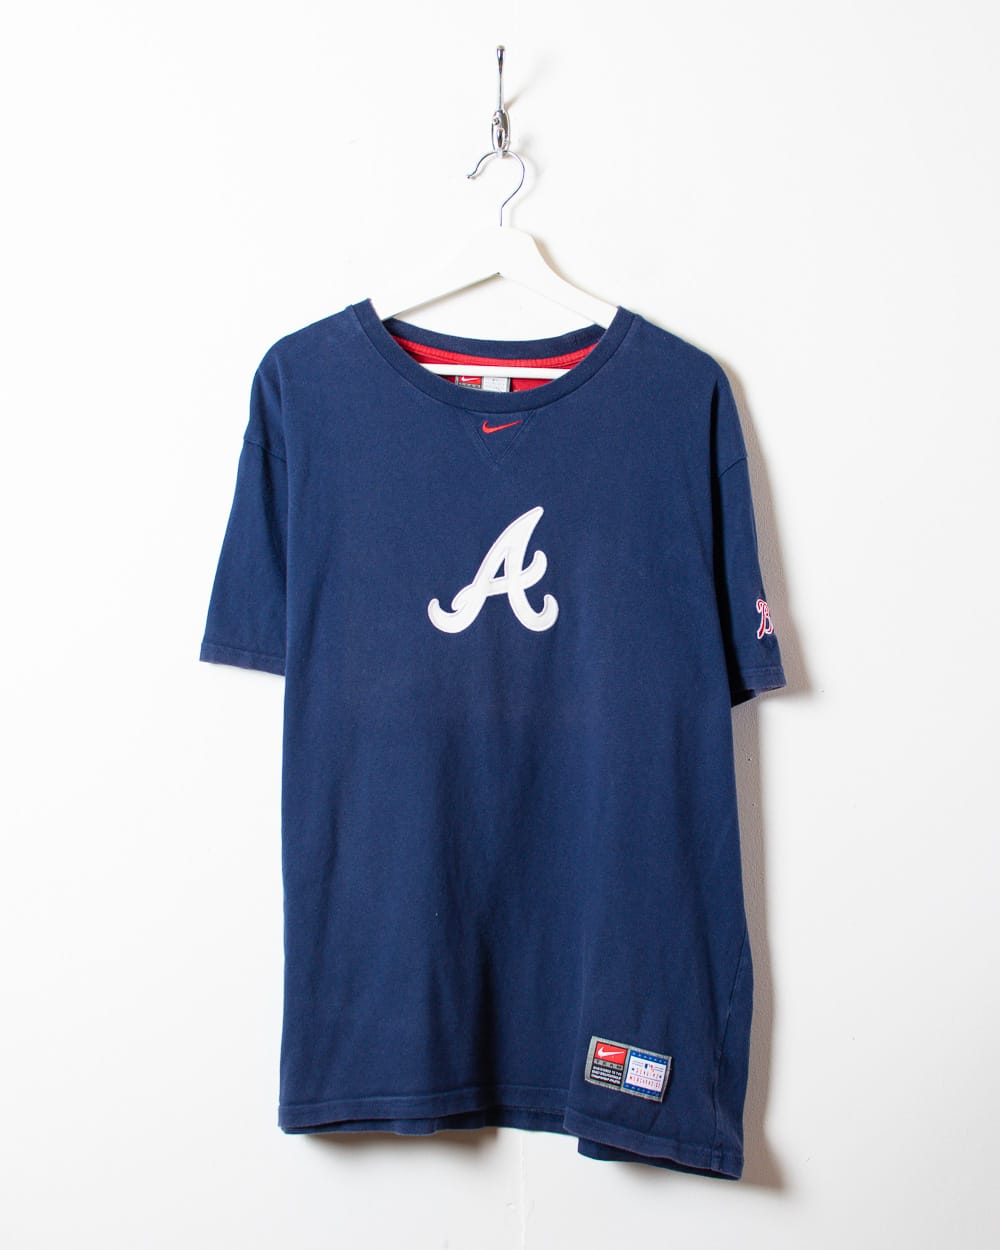 1995 MLB World Champions Atlanta Braves Graphic T-Shirt - Small